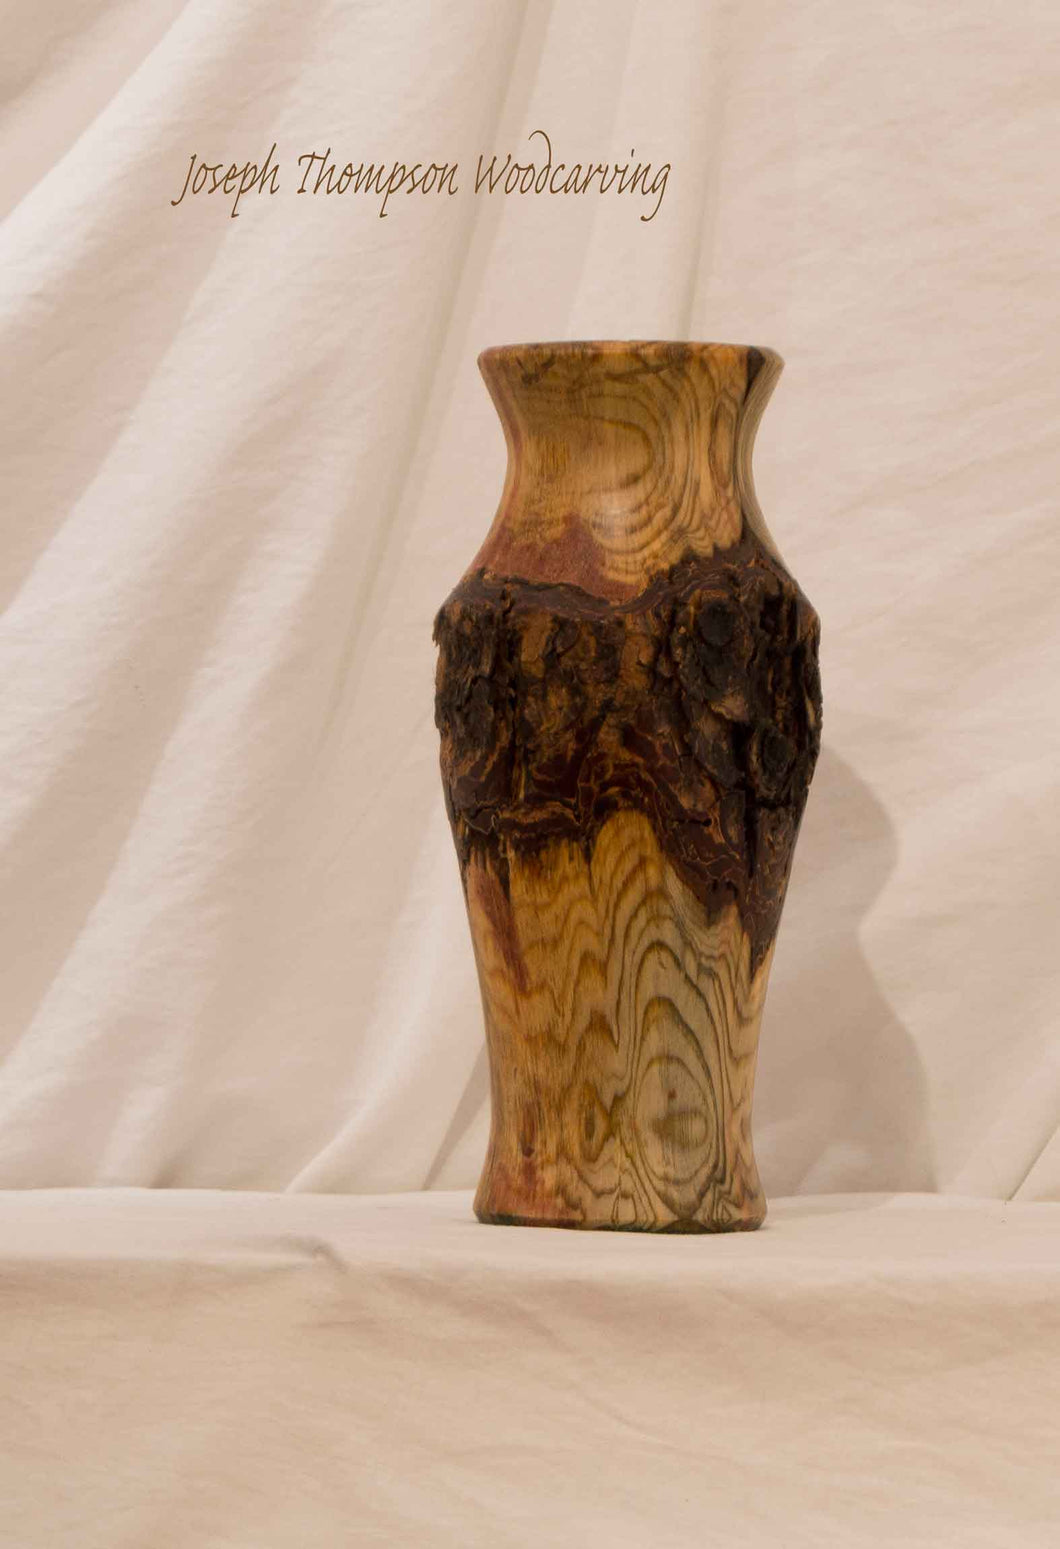 Pine Vase (31) Joseph Thompson, Woodcarving